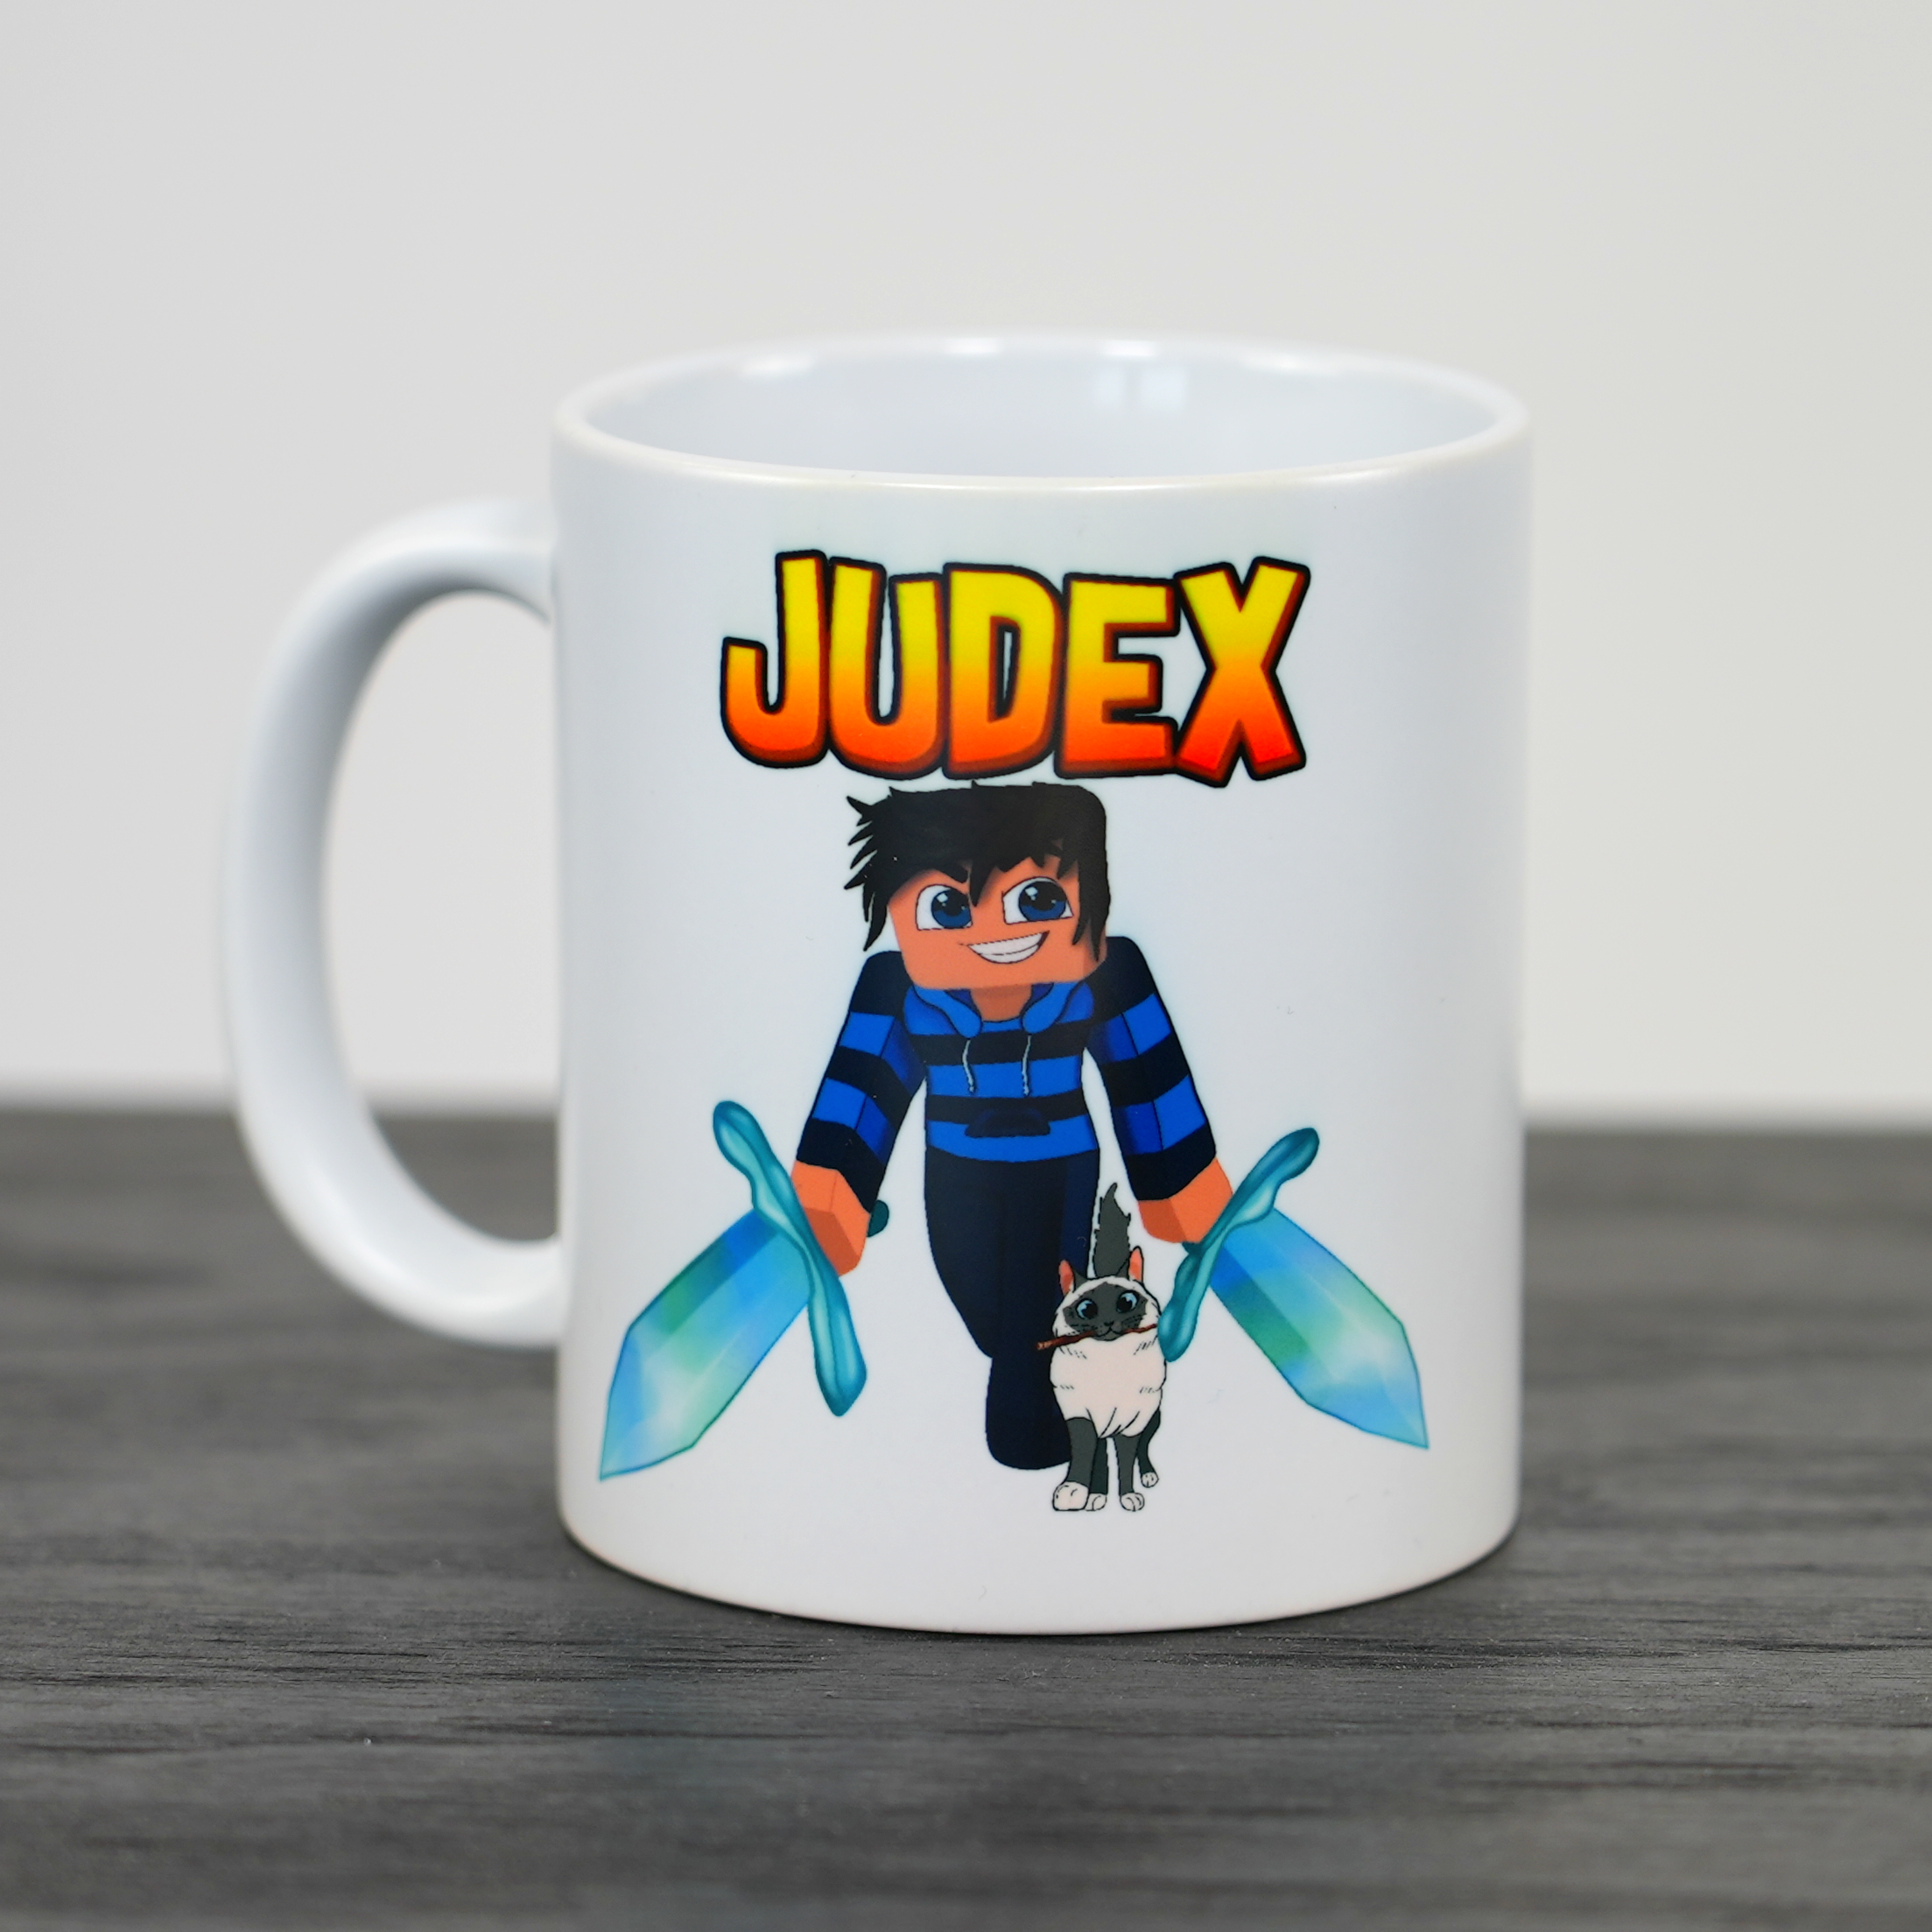 Judex Warrior Cup